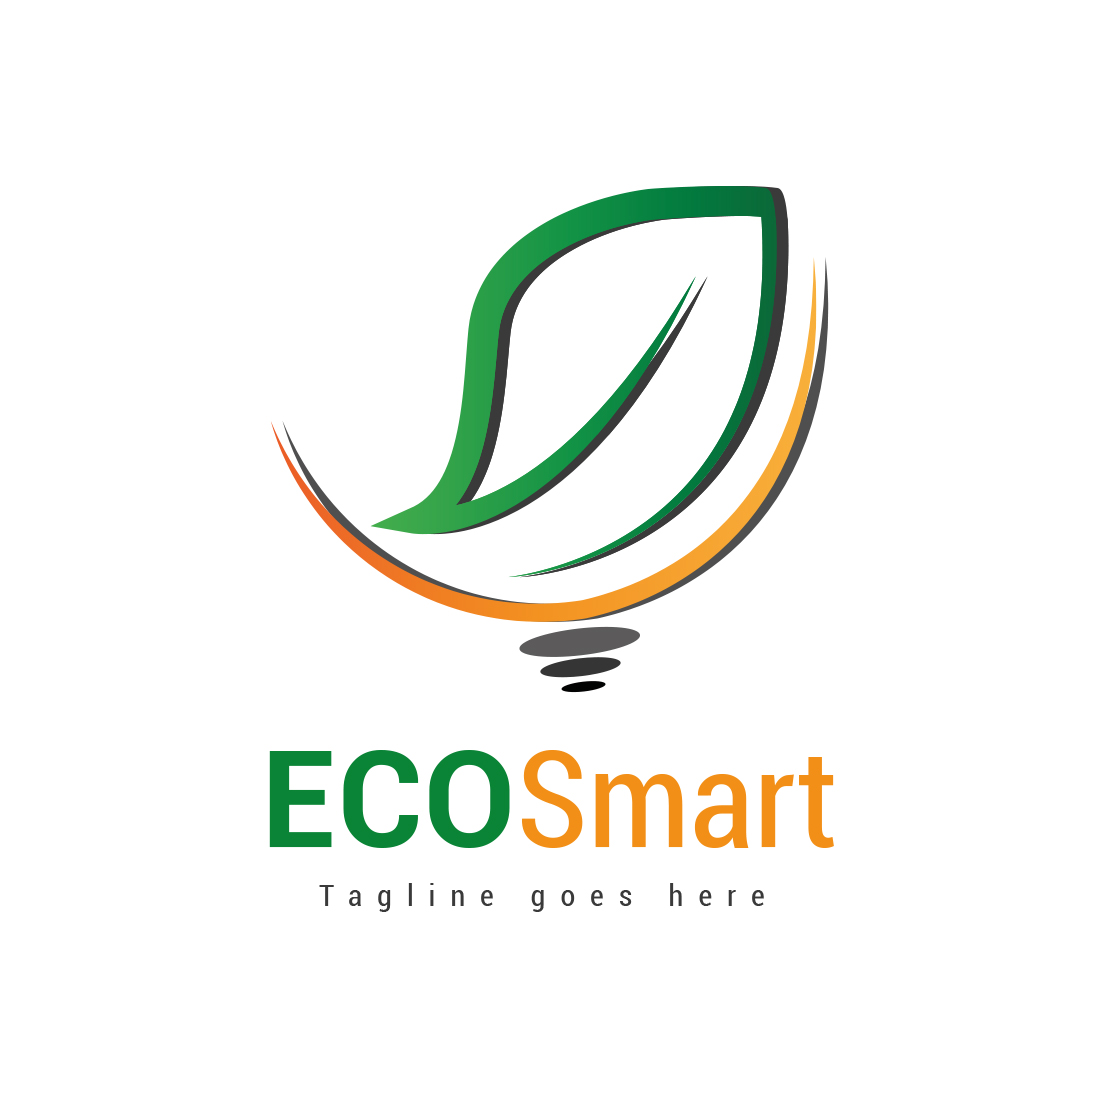 EcoSmart 3d logo design preview image.